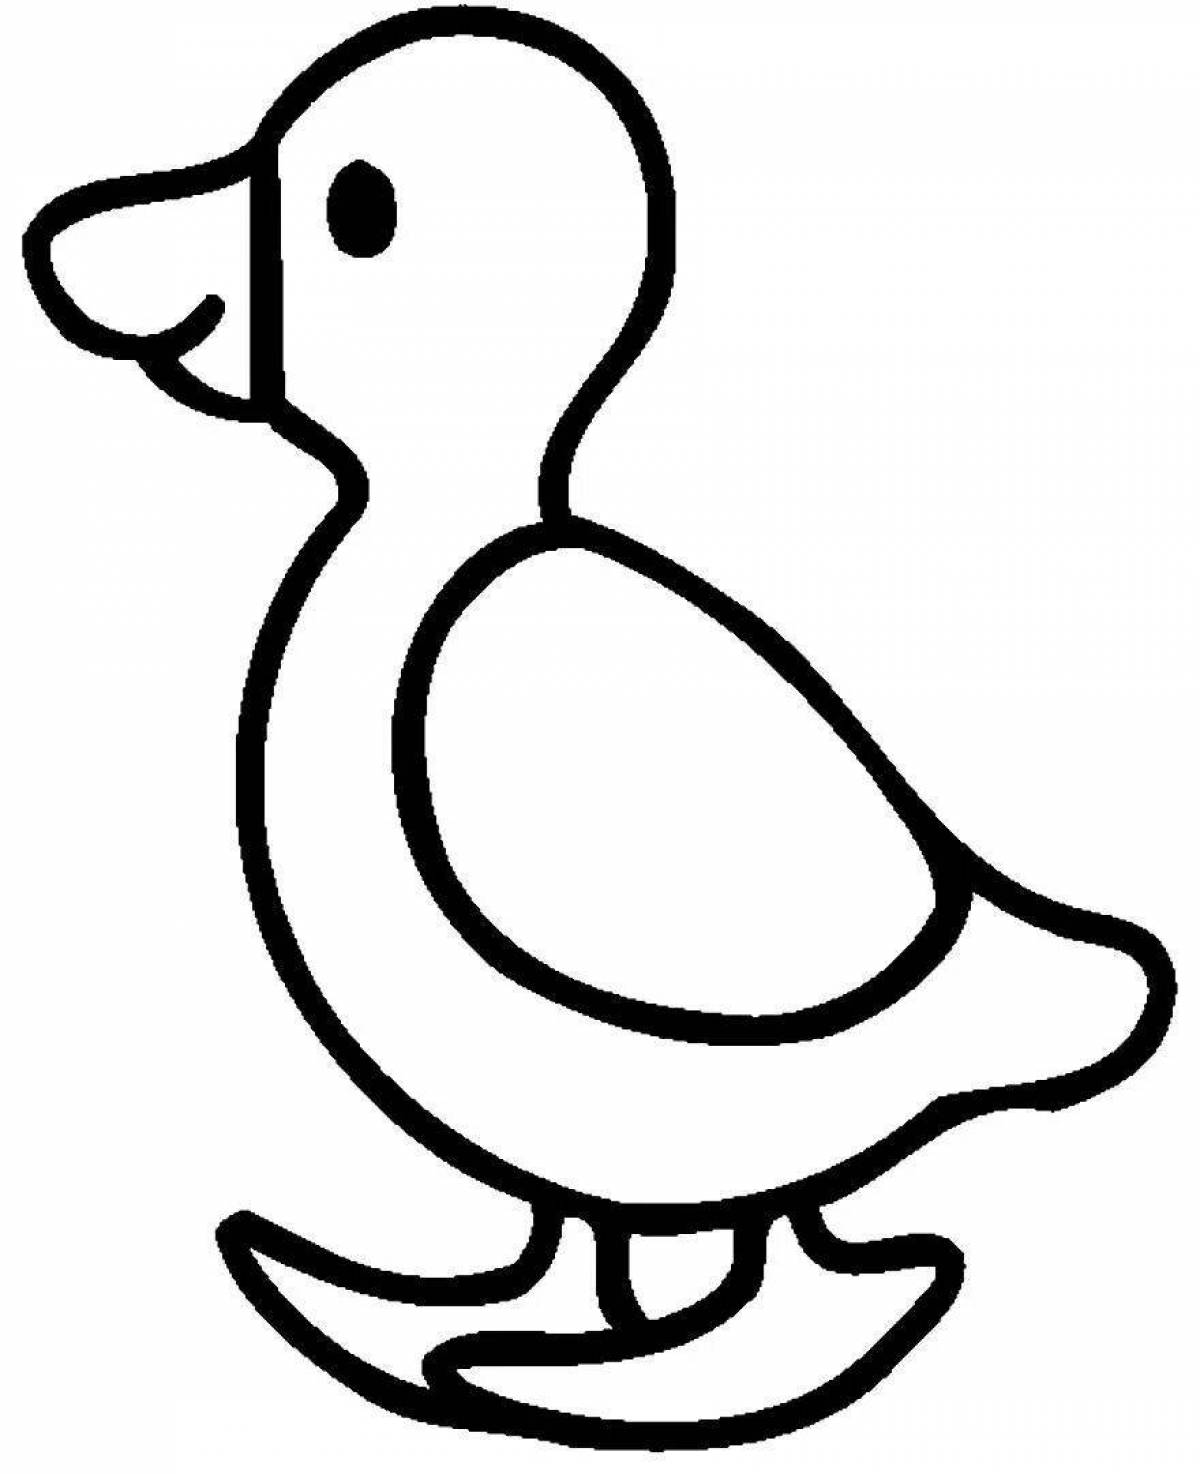 Coloring live little duck